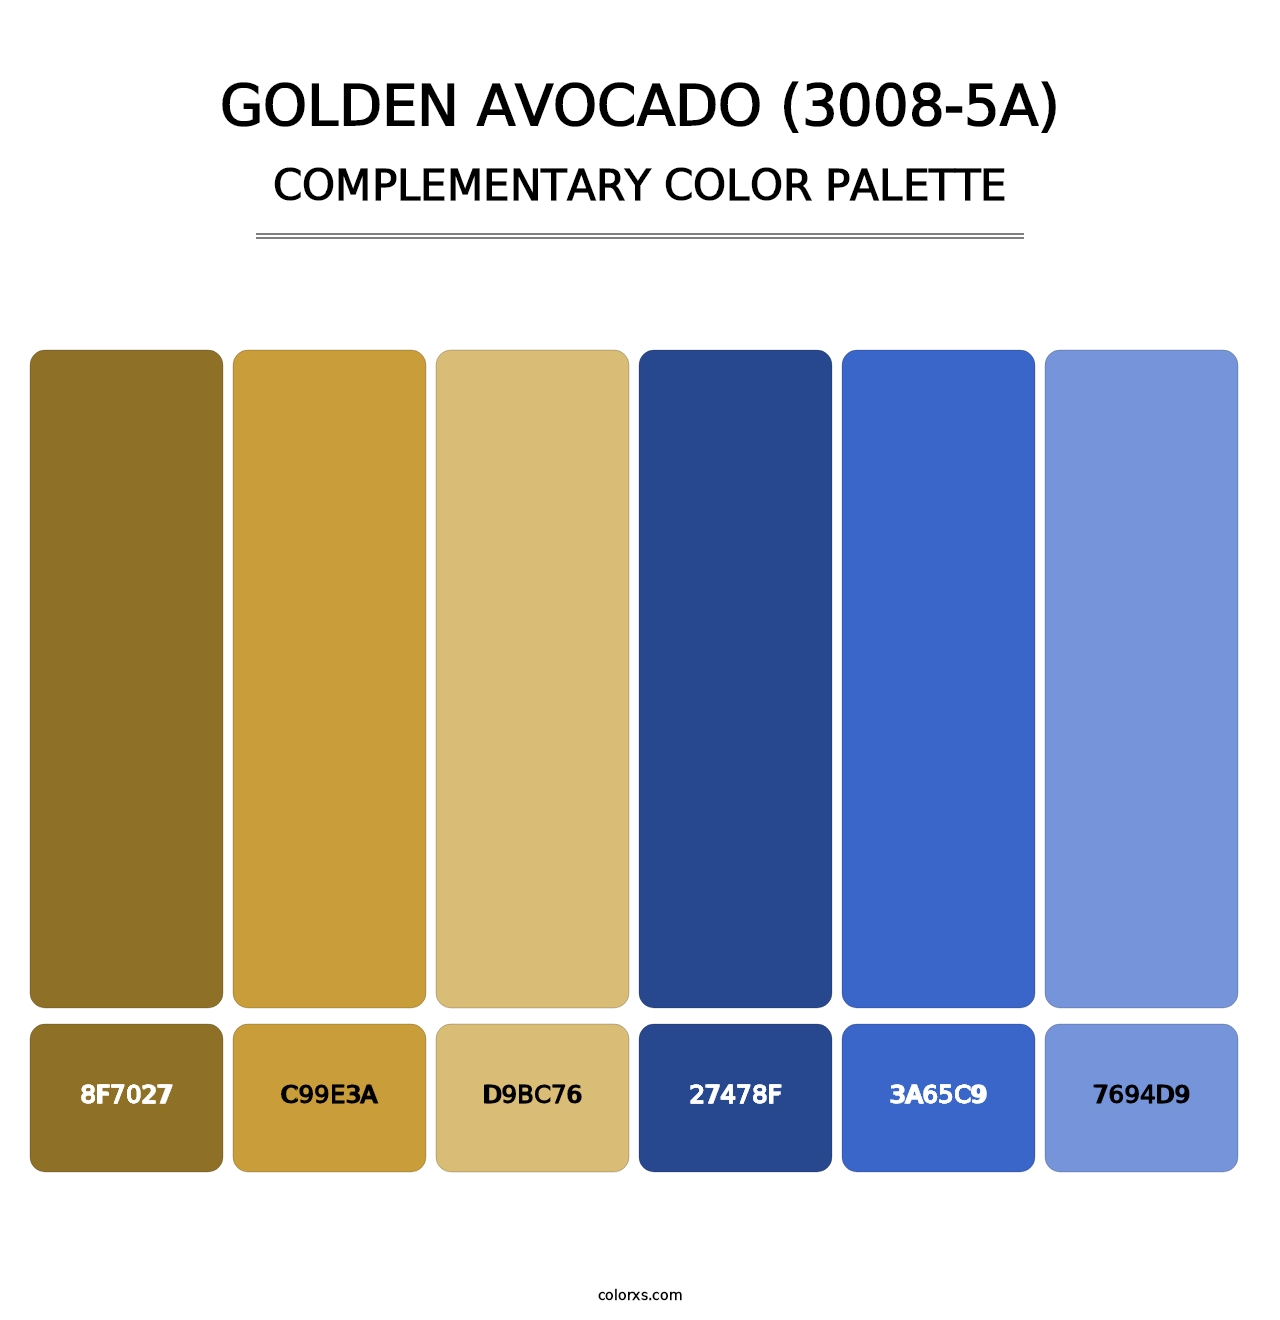 Golden Avocado (3008-5A) - Complementary Color Palette